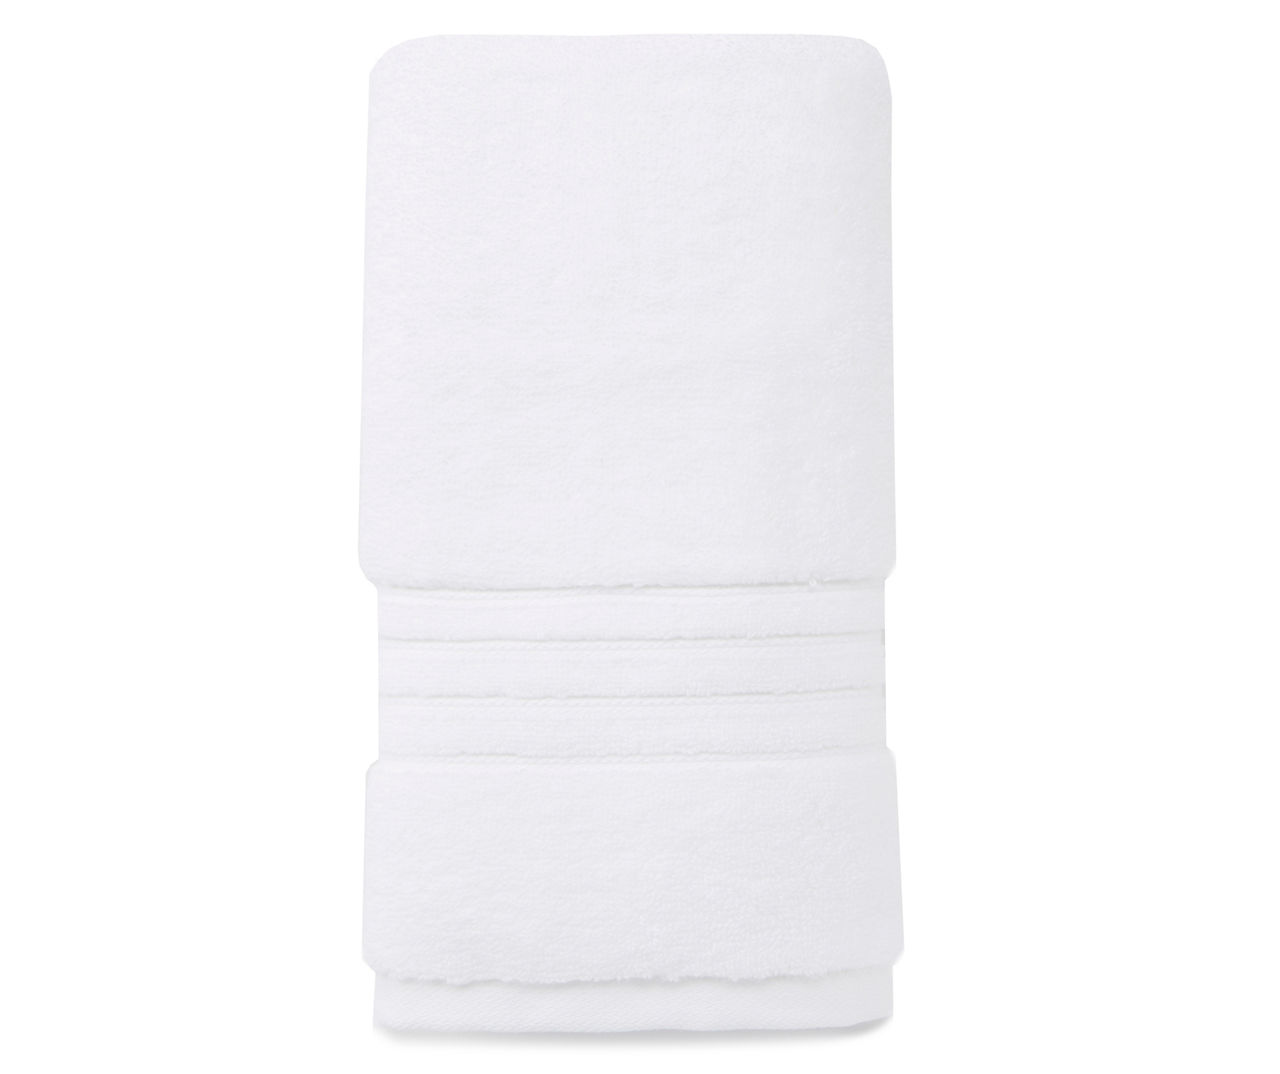 Broyhill Broyhill Egyptian Cotton Towel